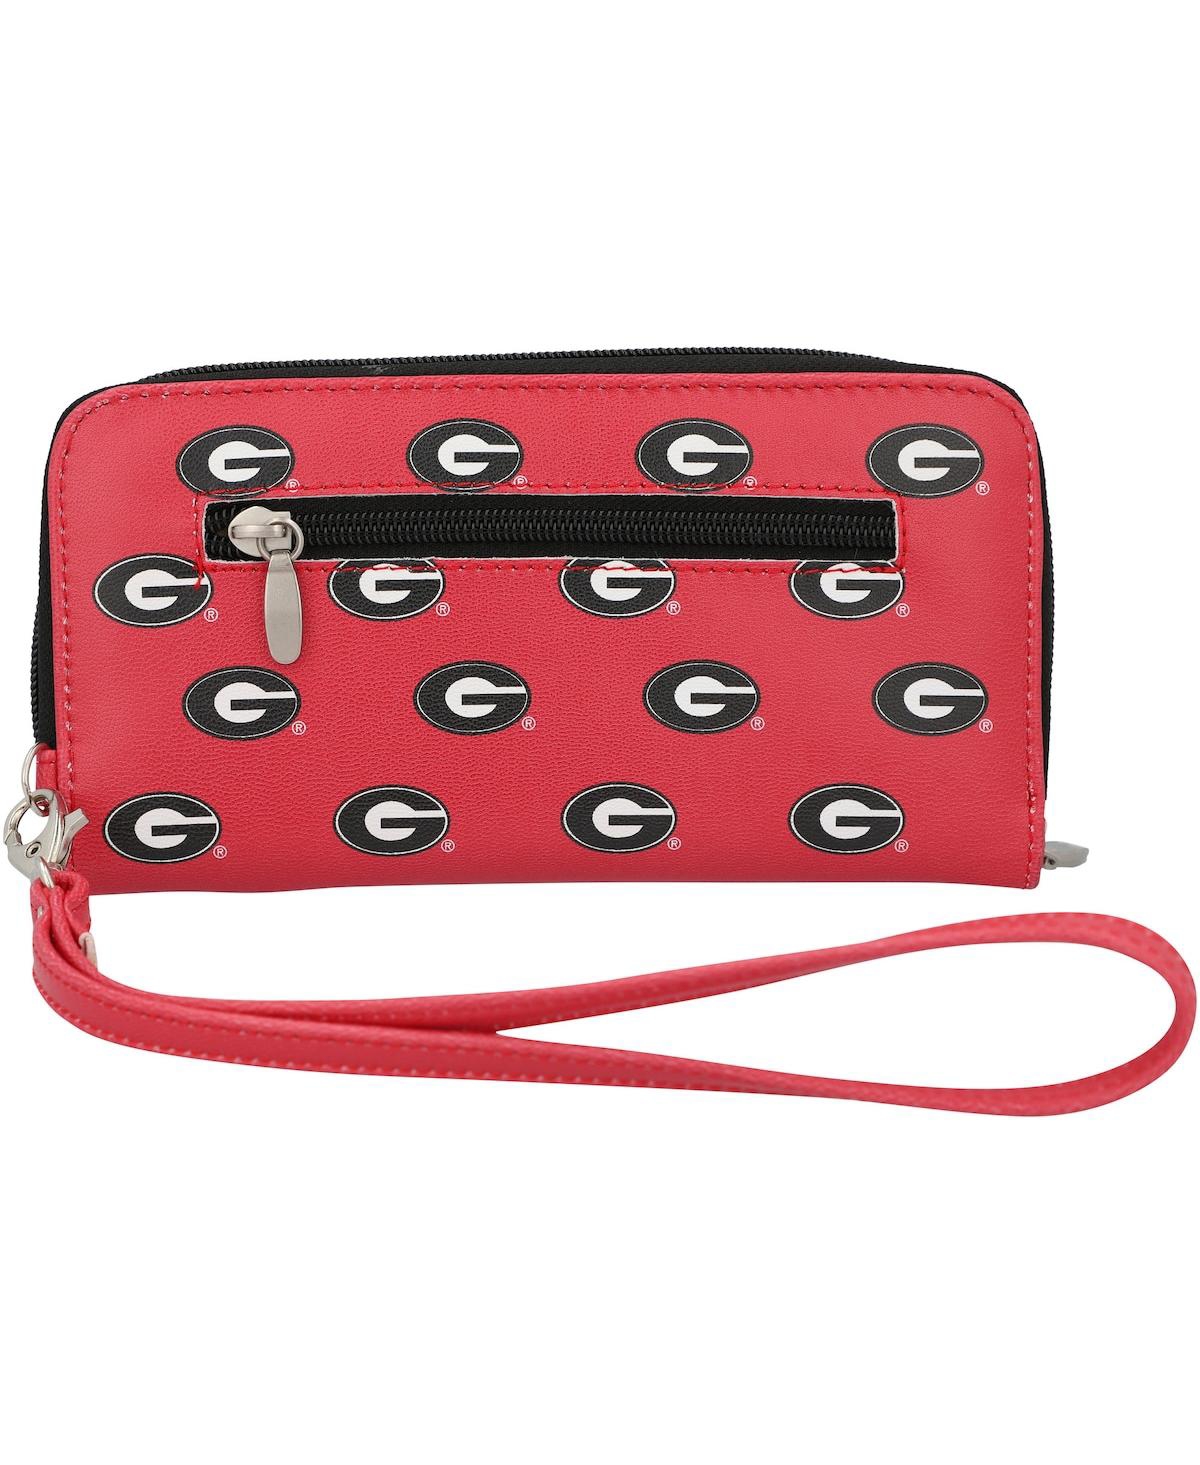 Women's Georgia Bulldogs Zip-Around Wristlet Wallet - Red